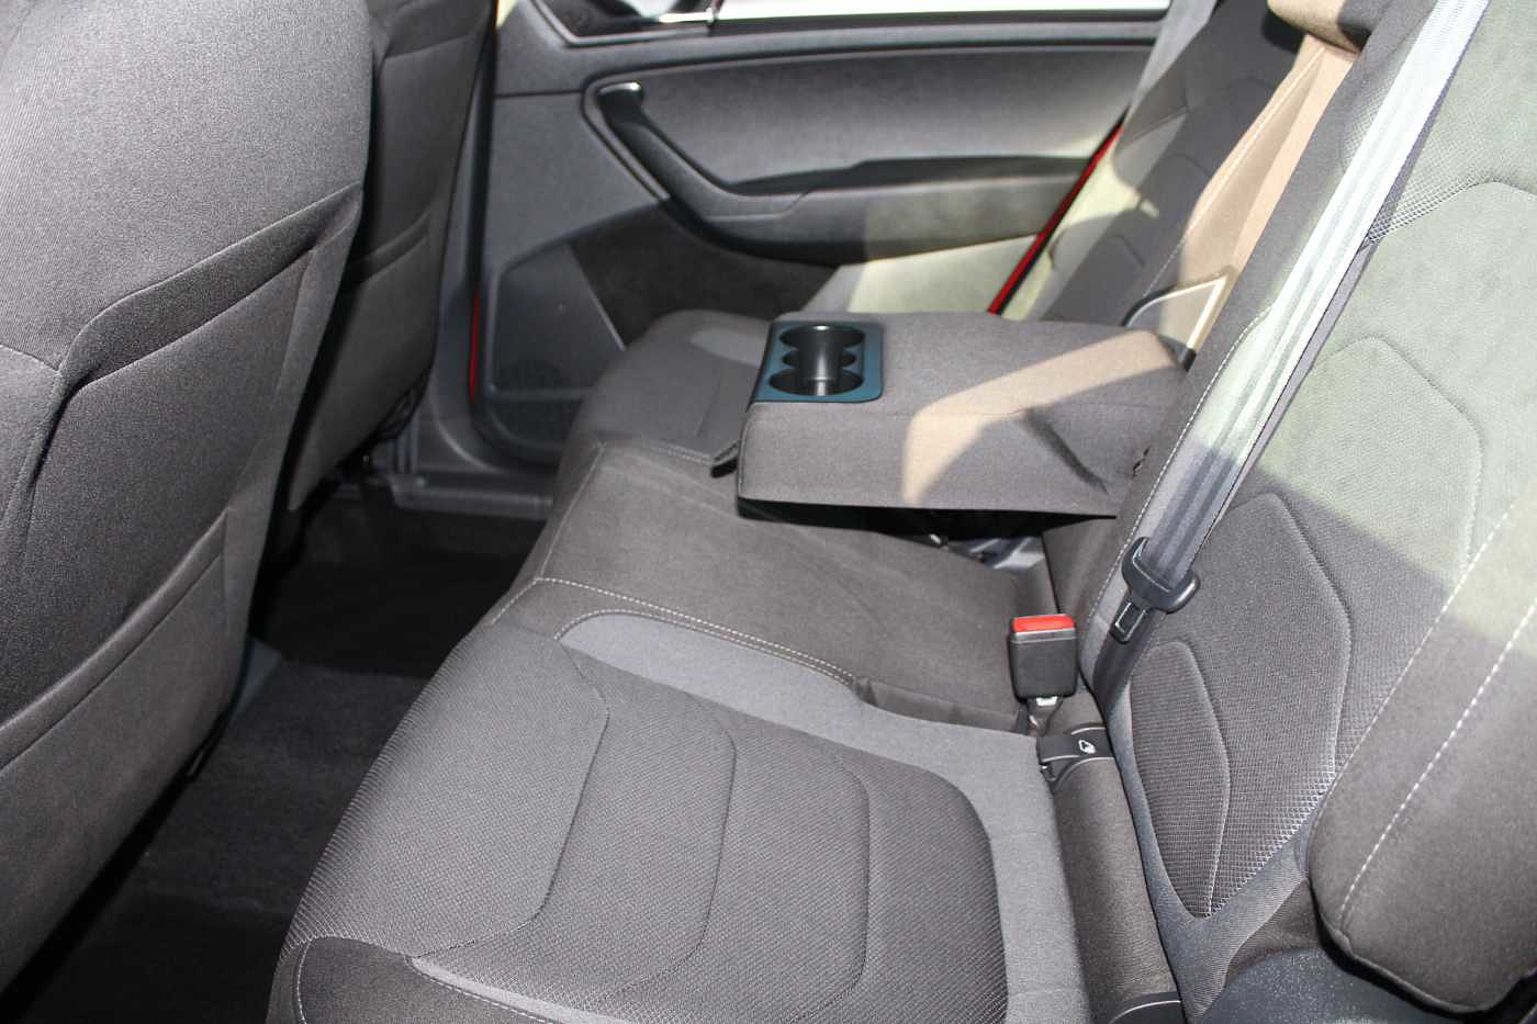 SKODA Kodiaq 2.0 TDI (150ps) SE Technology (7 Seats) Auto/DSG SUV